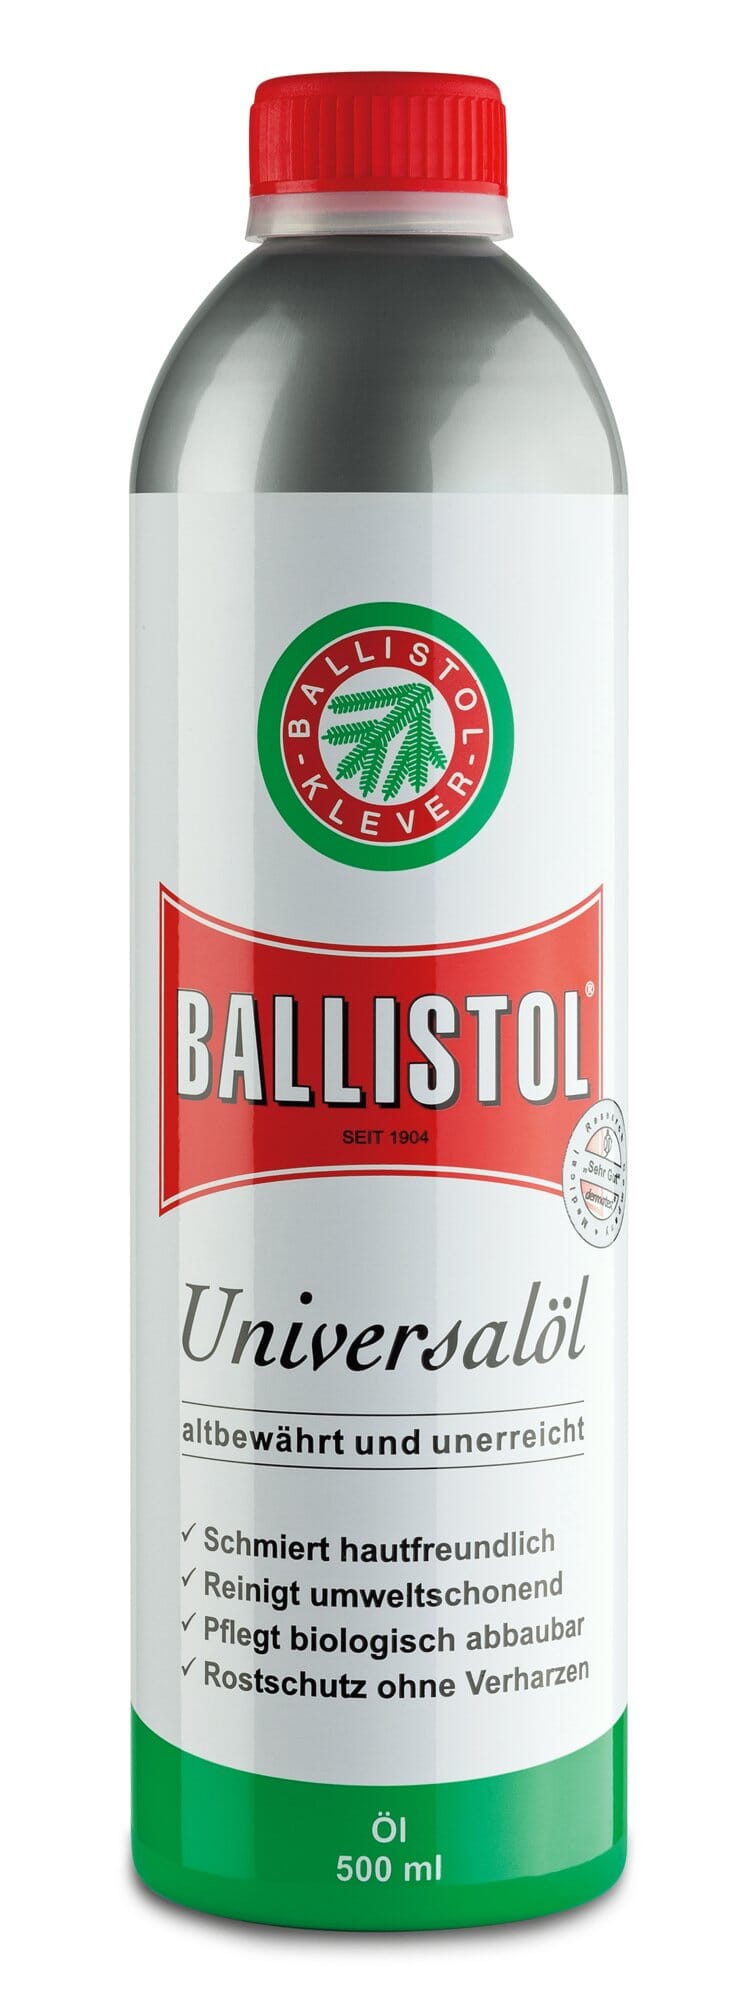 Ballistol GunCer Keramik-Waffenöl (Spray) günstig kaufen - Askari